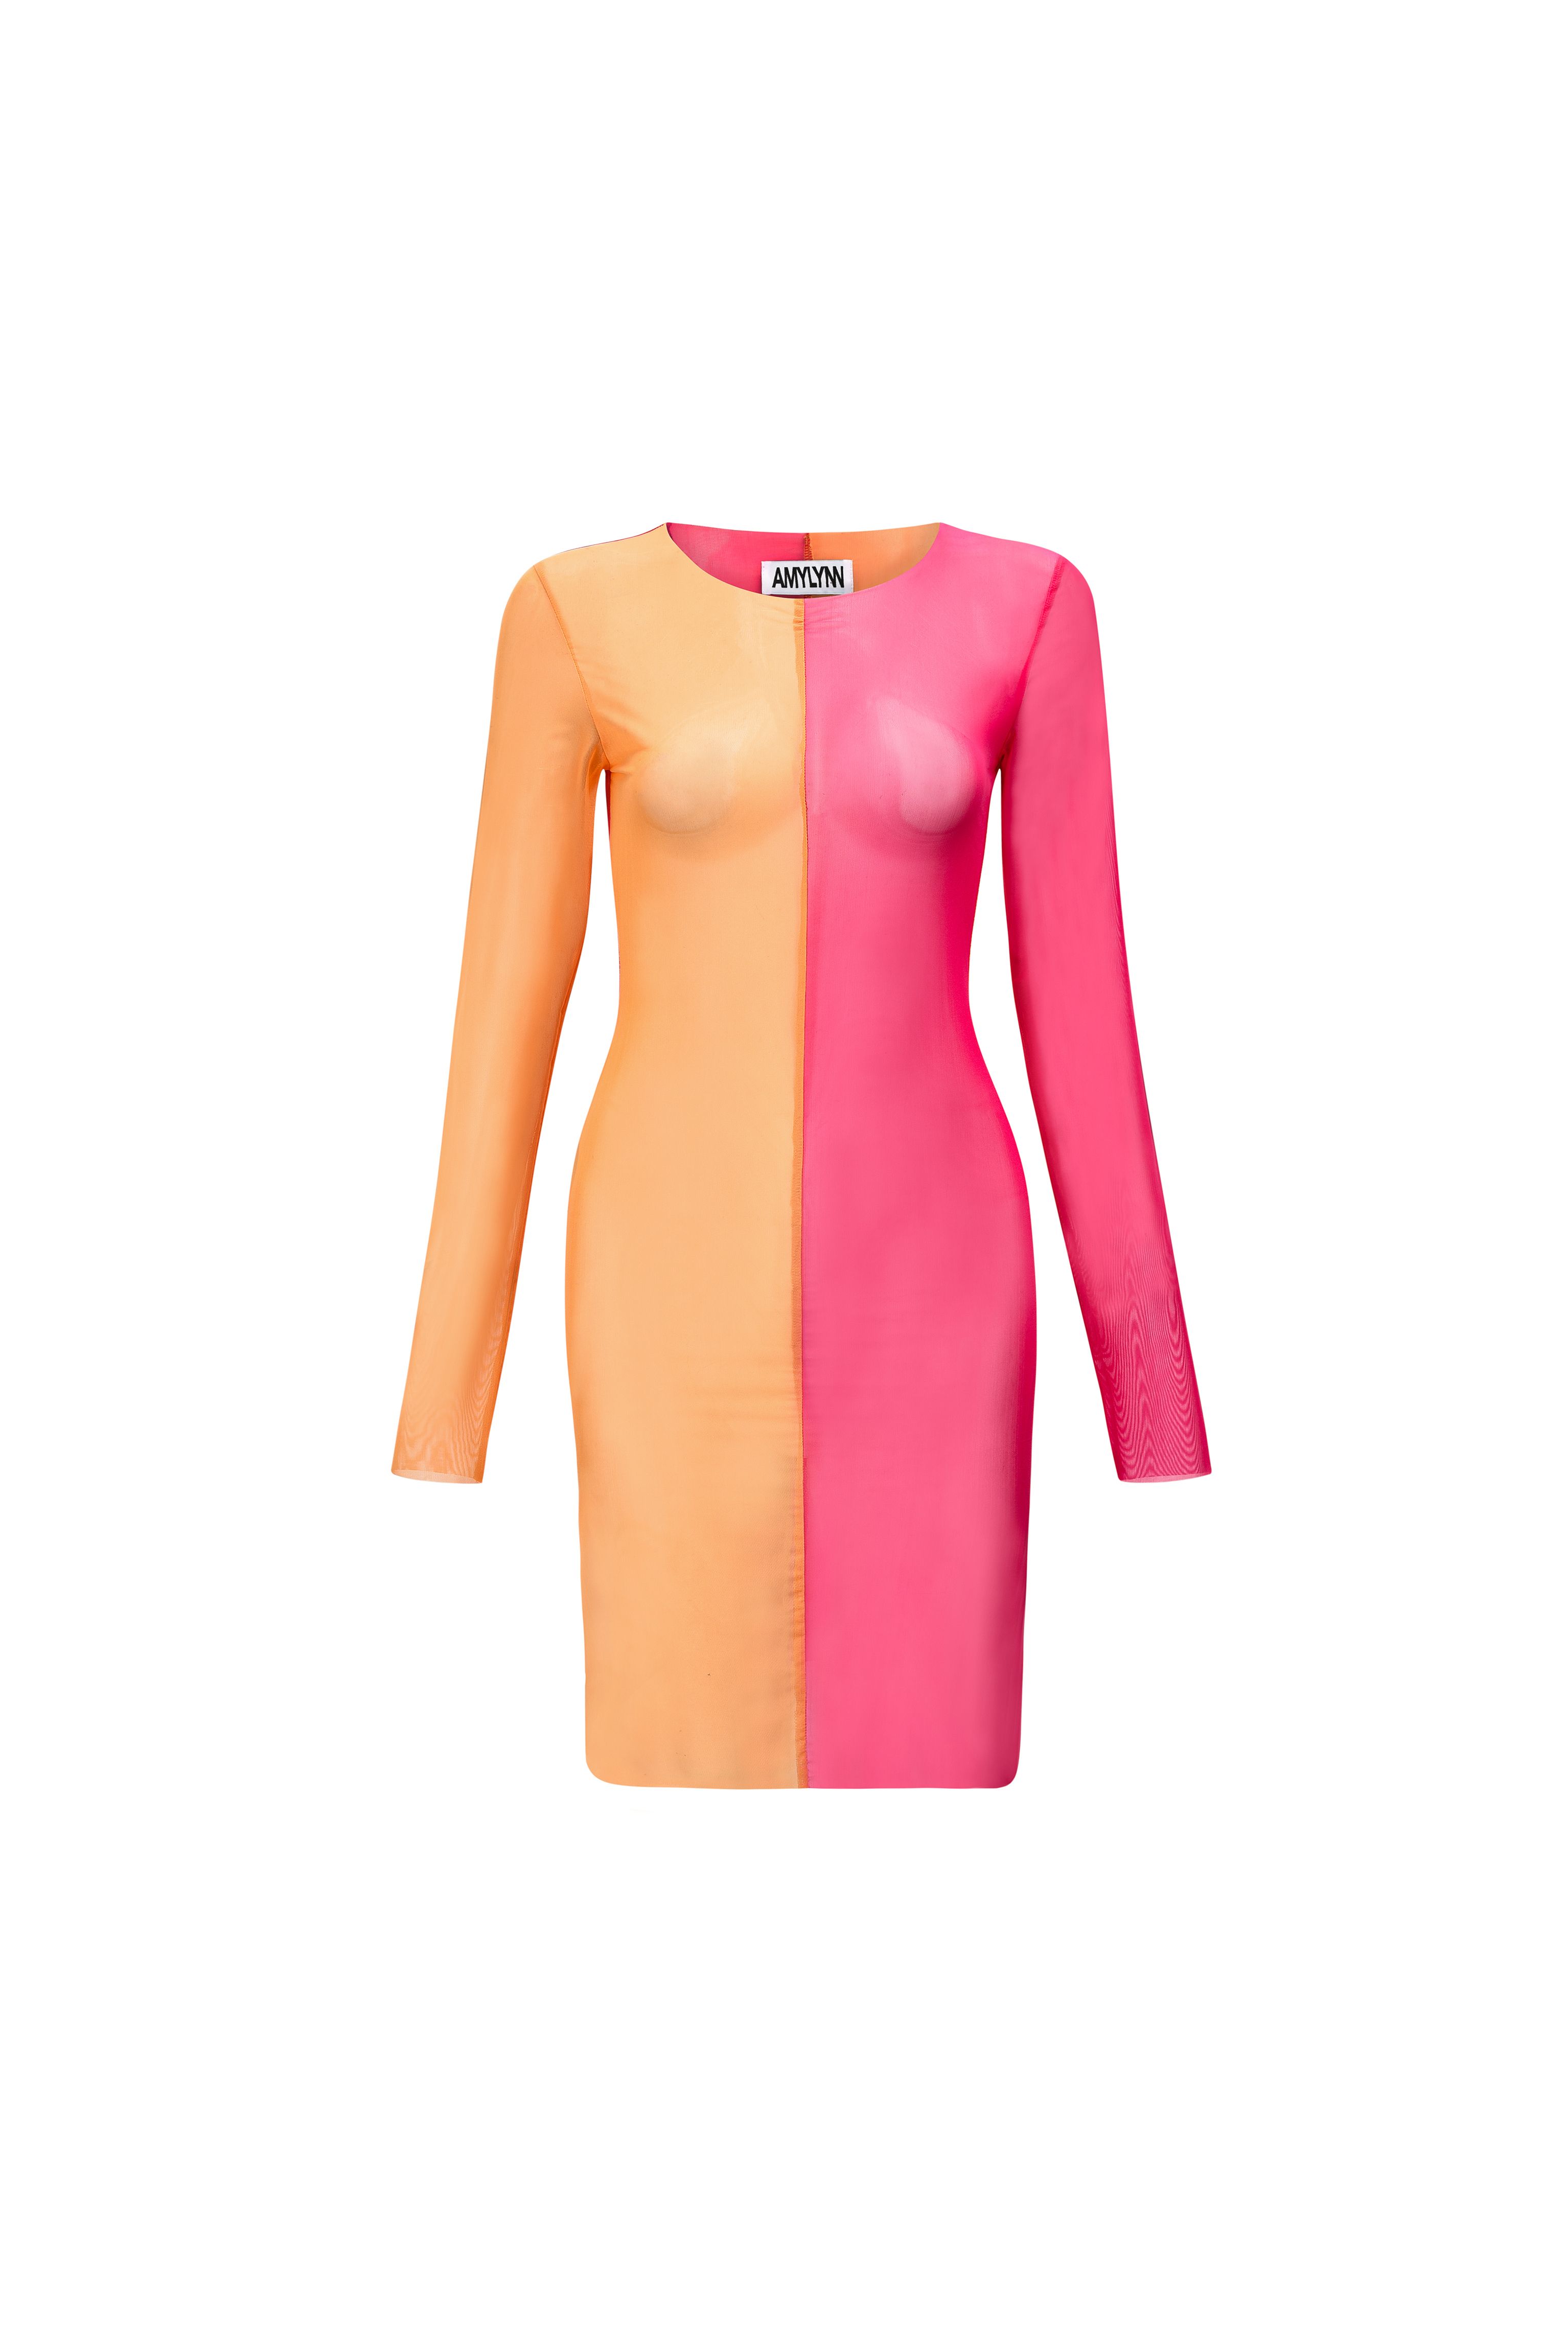 Gemini Colour Block Sheer Mesh Dress in Orange and Pink | AMYLYNN